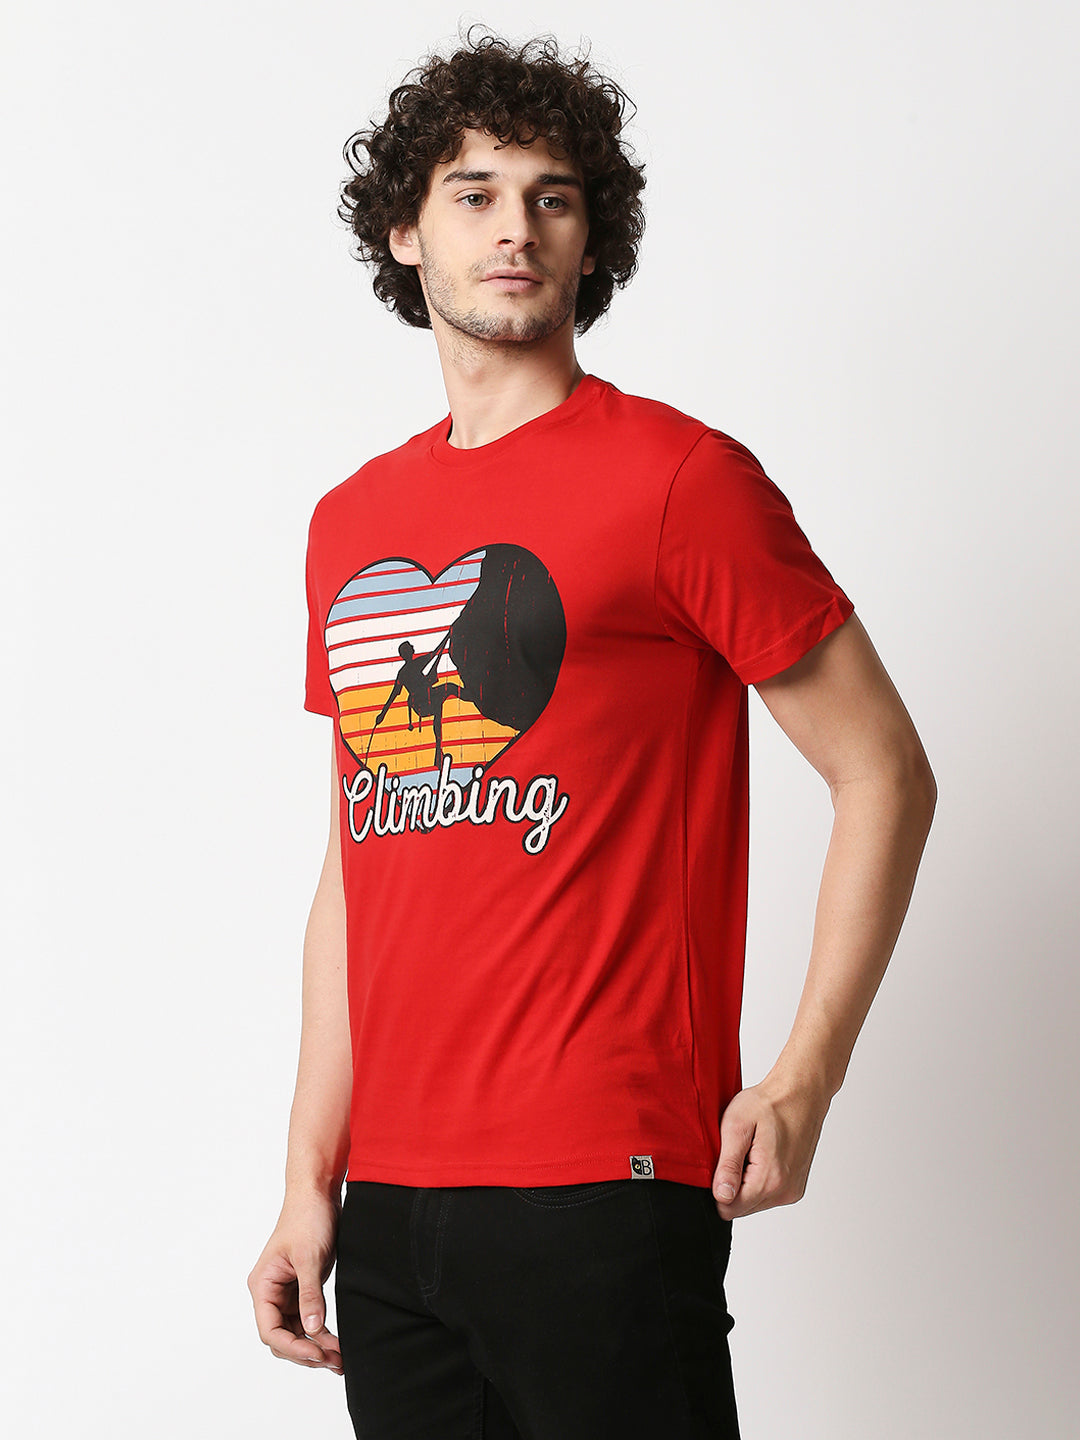 Buy Men's CHERRY RED Regular fit Chest print T-shirt